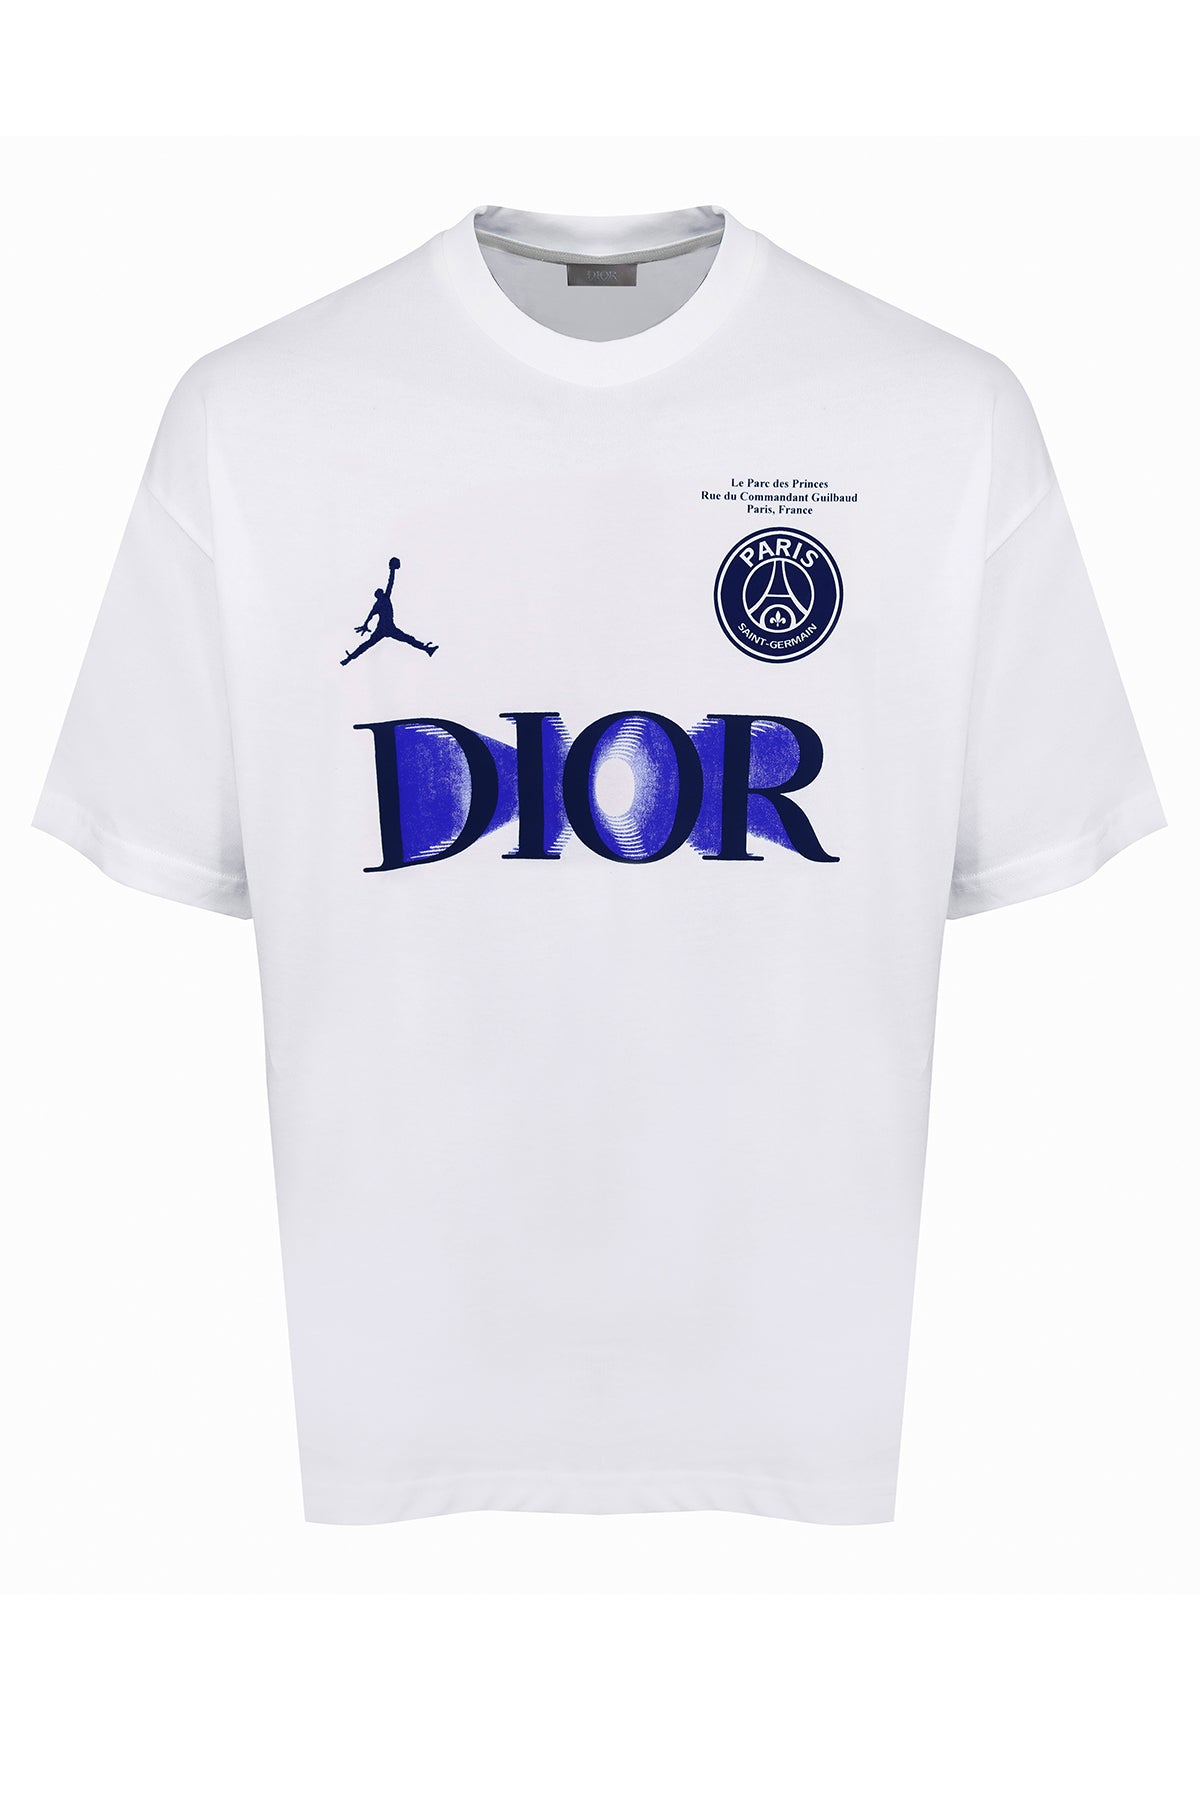 PSG X Dior Custom Kit  Psg Dior Football